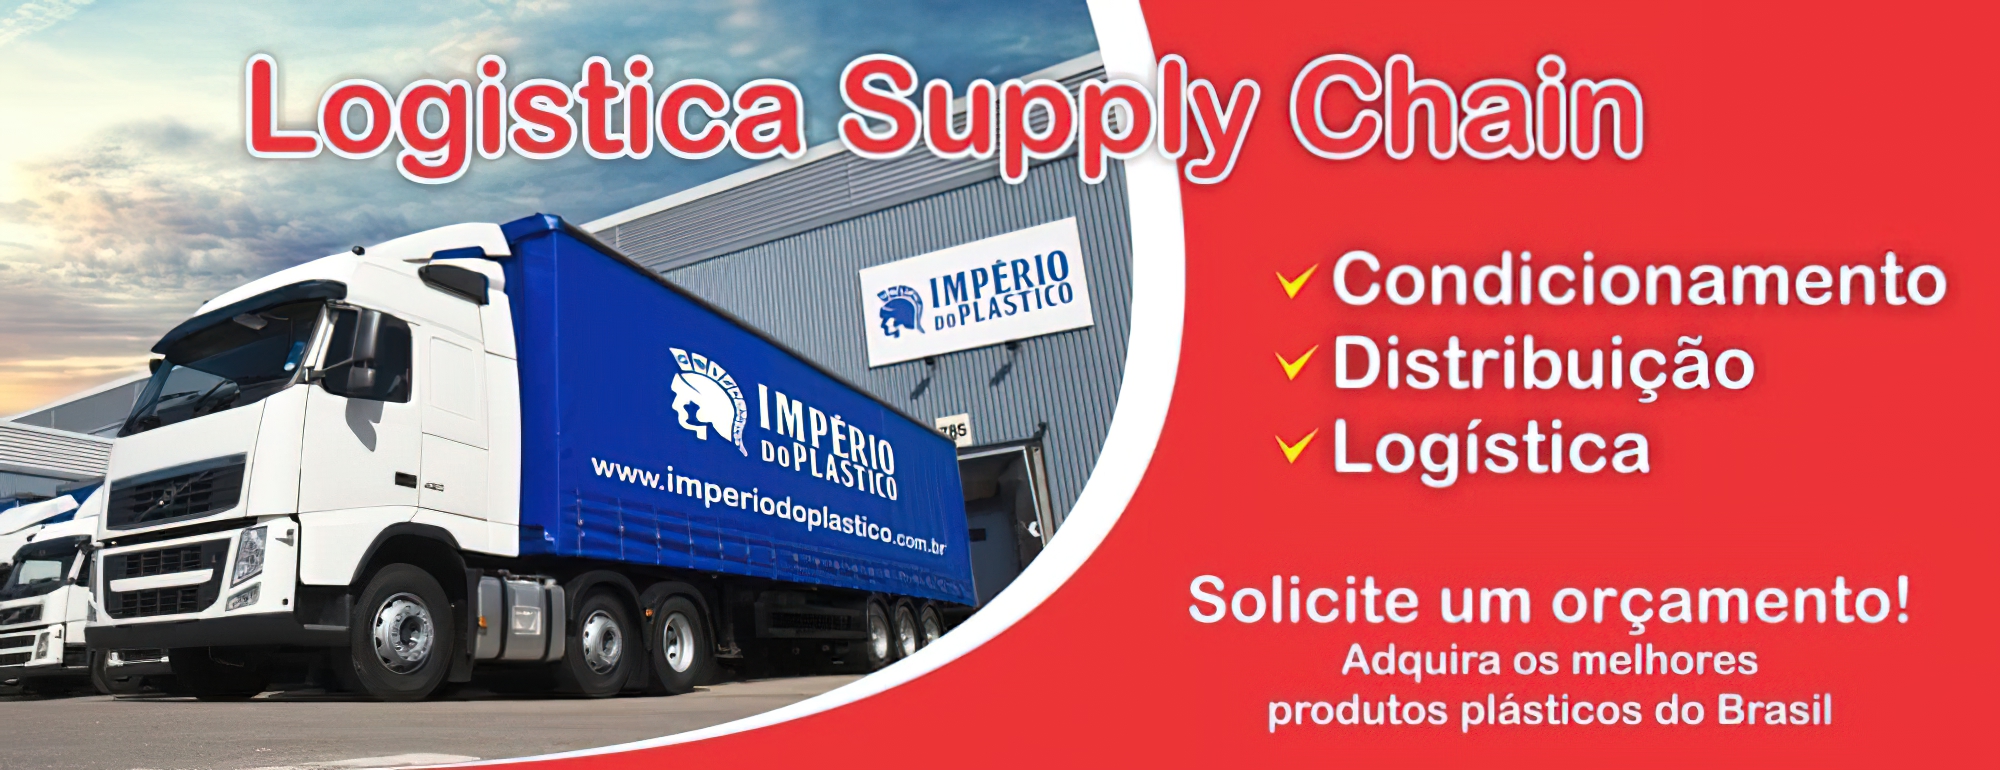 logistica-supply-chain